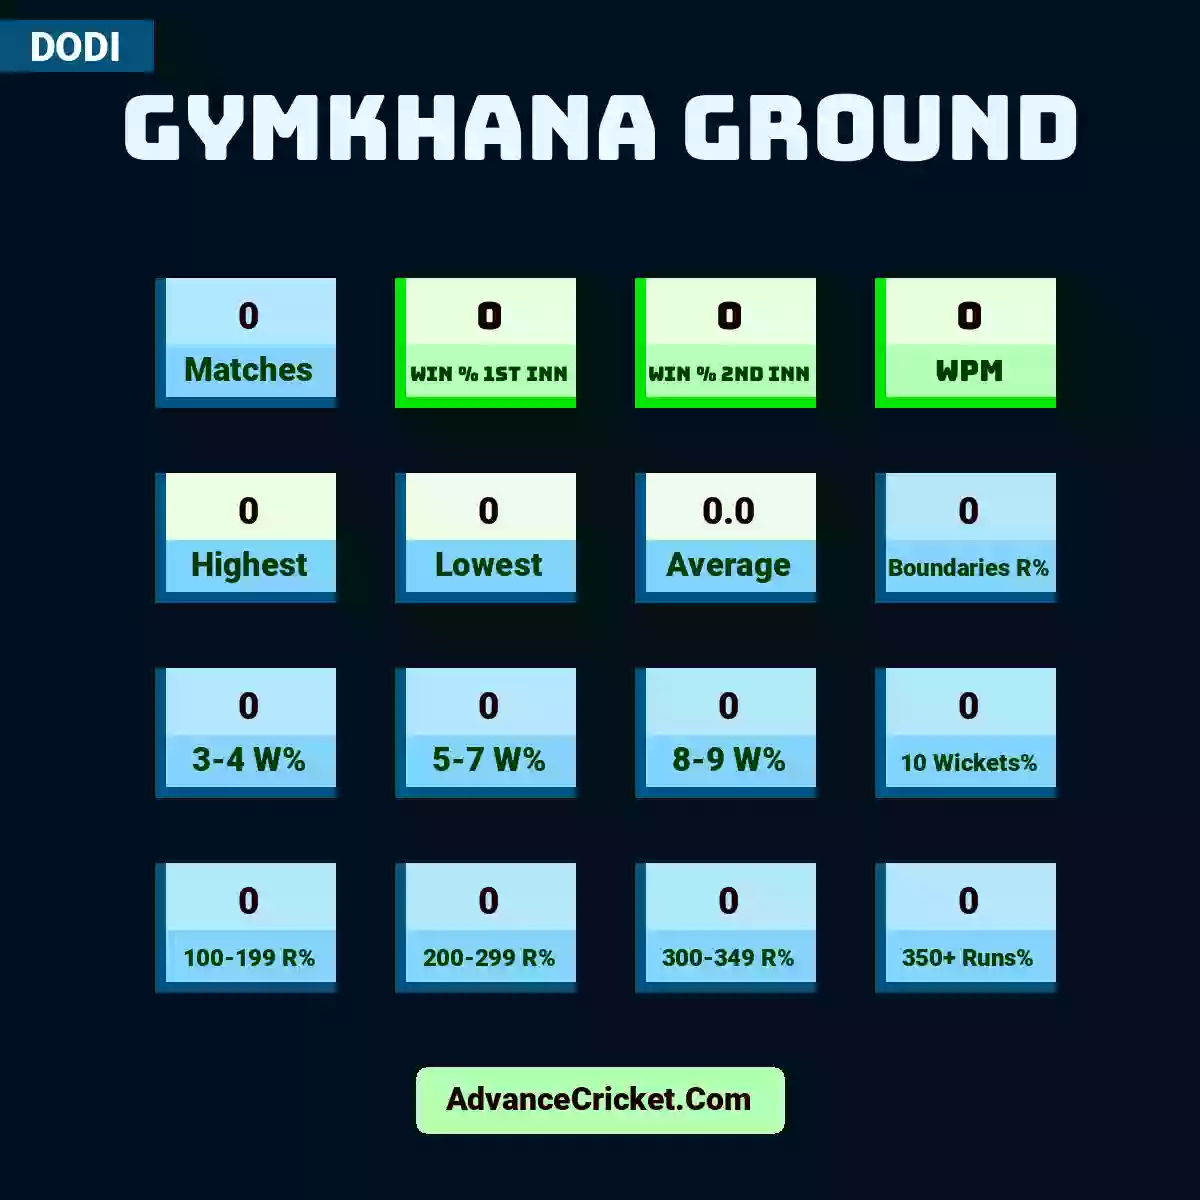 Image showing Gymkhana Ground with Matches: 0, Win % 1st Inn: 0, Win % 2nd Inn: 0, WPM: 0, Highest: 0, Lowest: 0, Average: 0.0, Boundaries R%: 0, 3-4 W%: 0, 5-7 W%: 0, 8-9 W%: 0, 10 Wickets%: 0, 100-199 R%: 0, 200-299 R%: 0, 300-349 R%: 0, 350+ Runs%: 0.